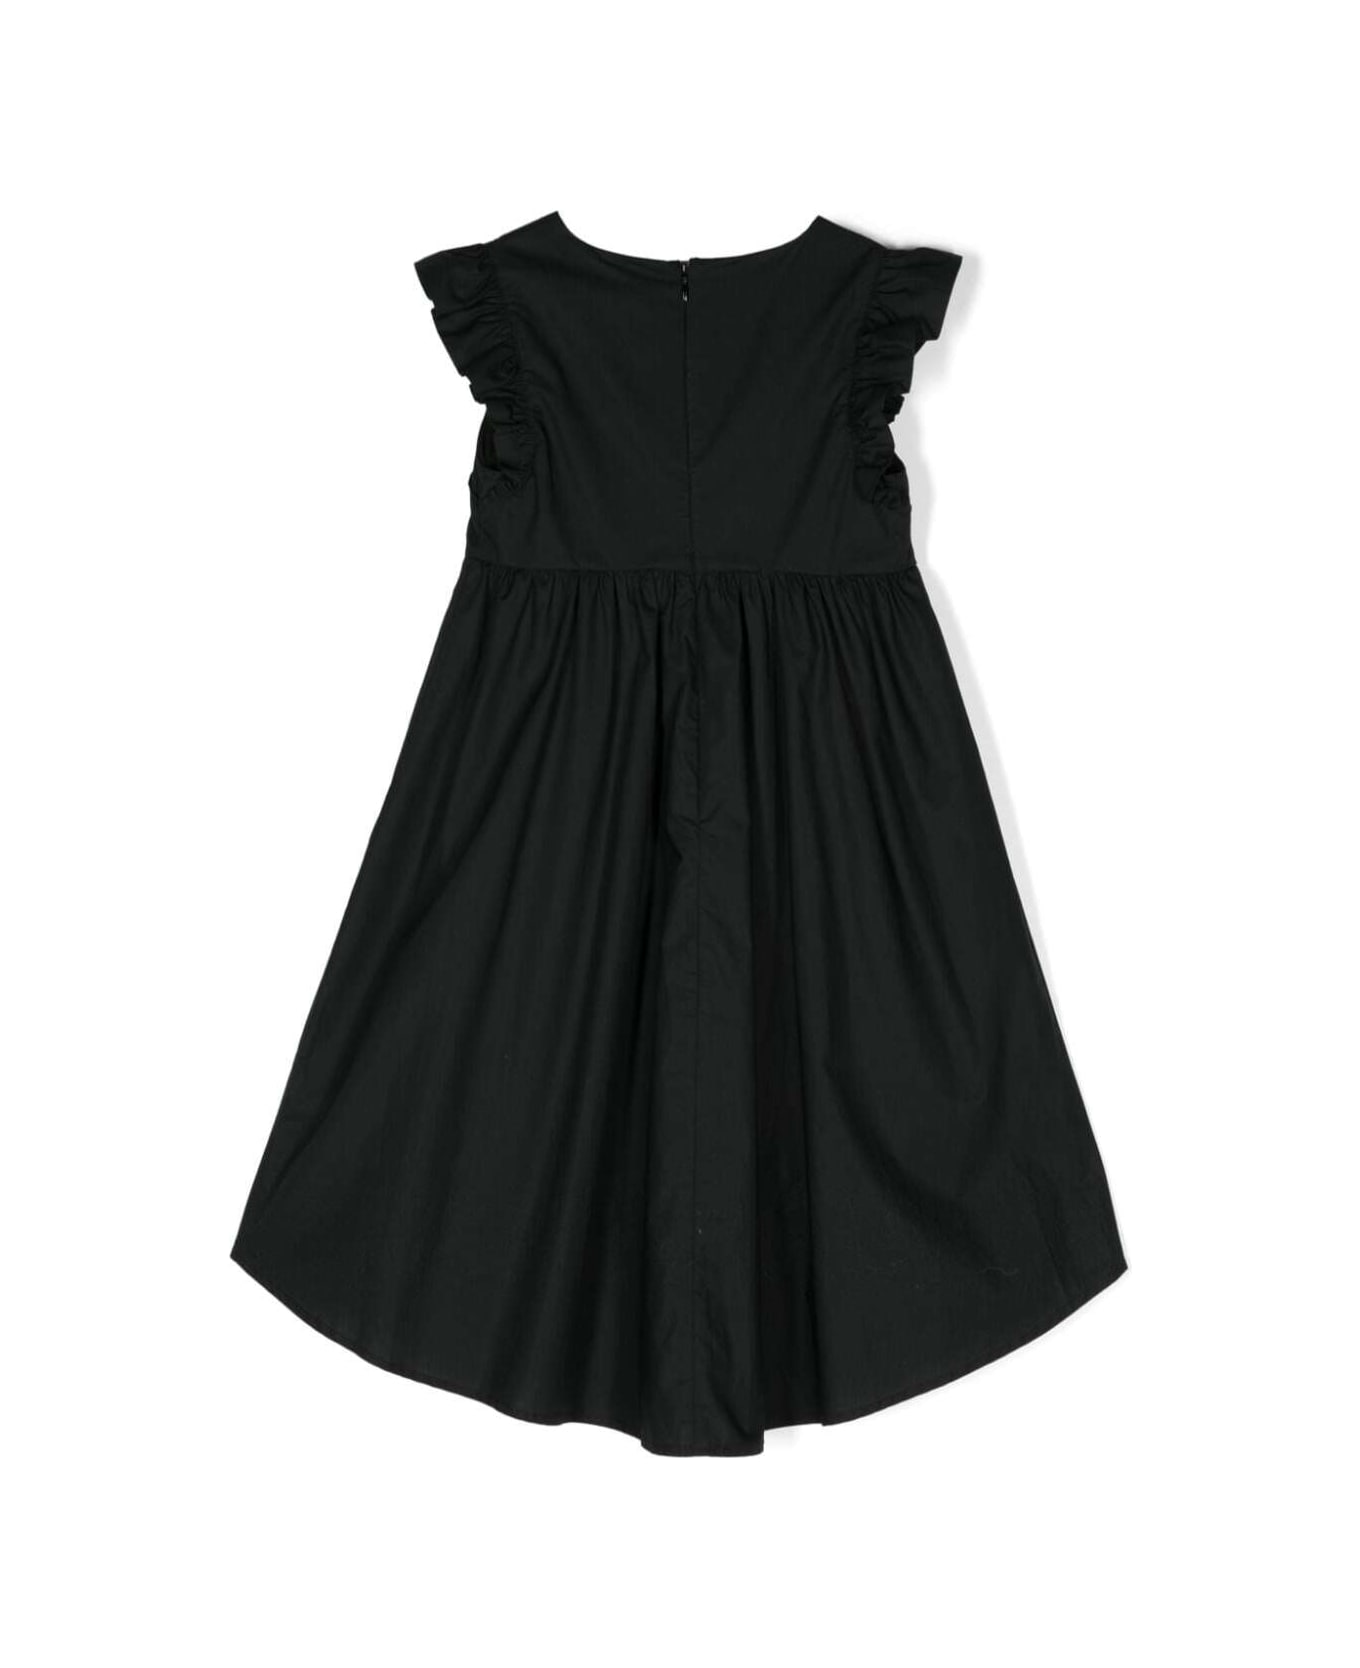 Moschino Dress - Black